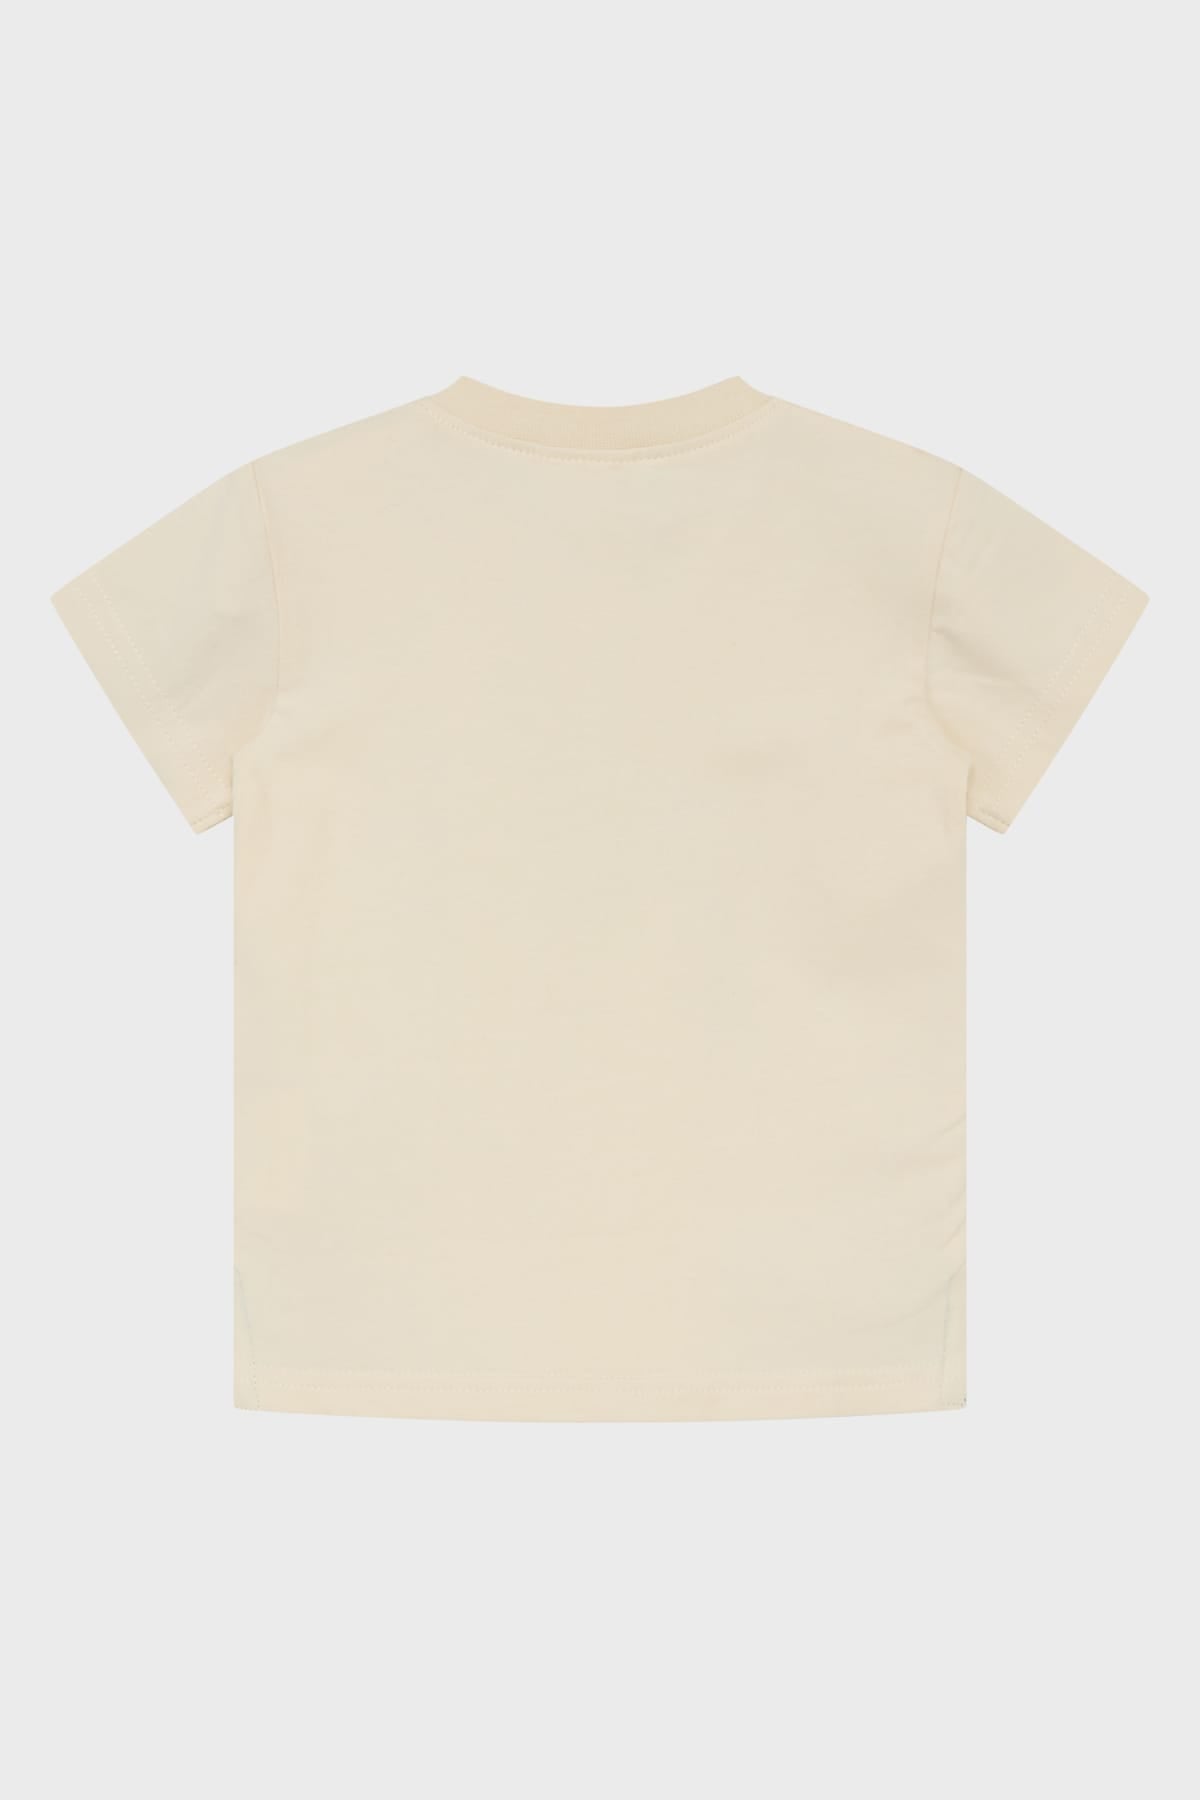 Hust & Claire T-Shirt "Arthur" mit Großem Löwenkopf-Motiv-Mokkini Kindermode